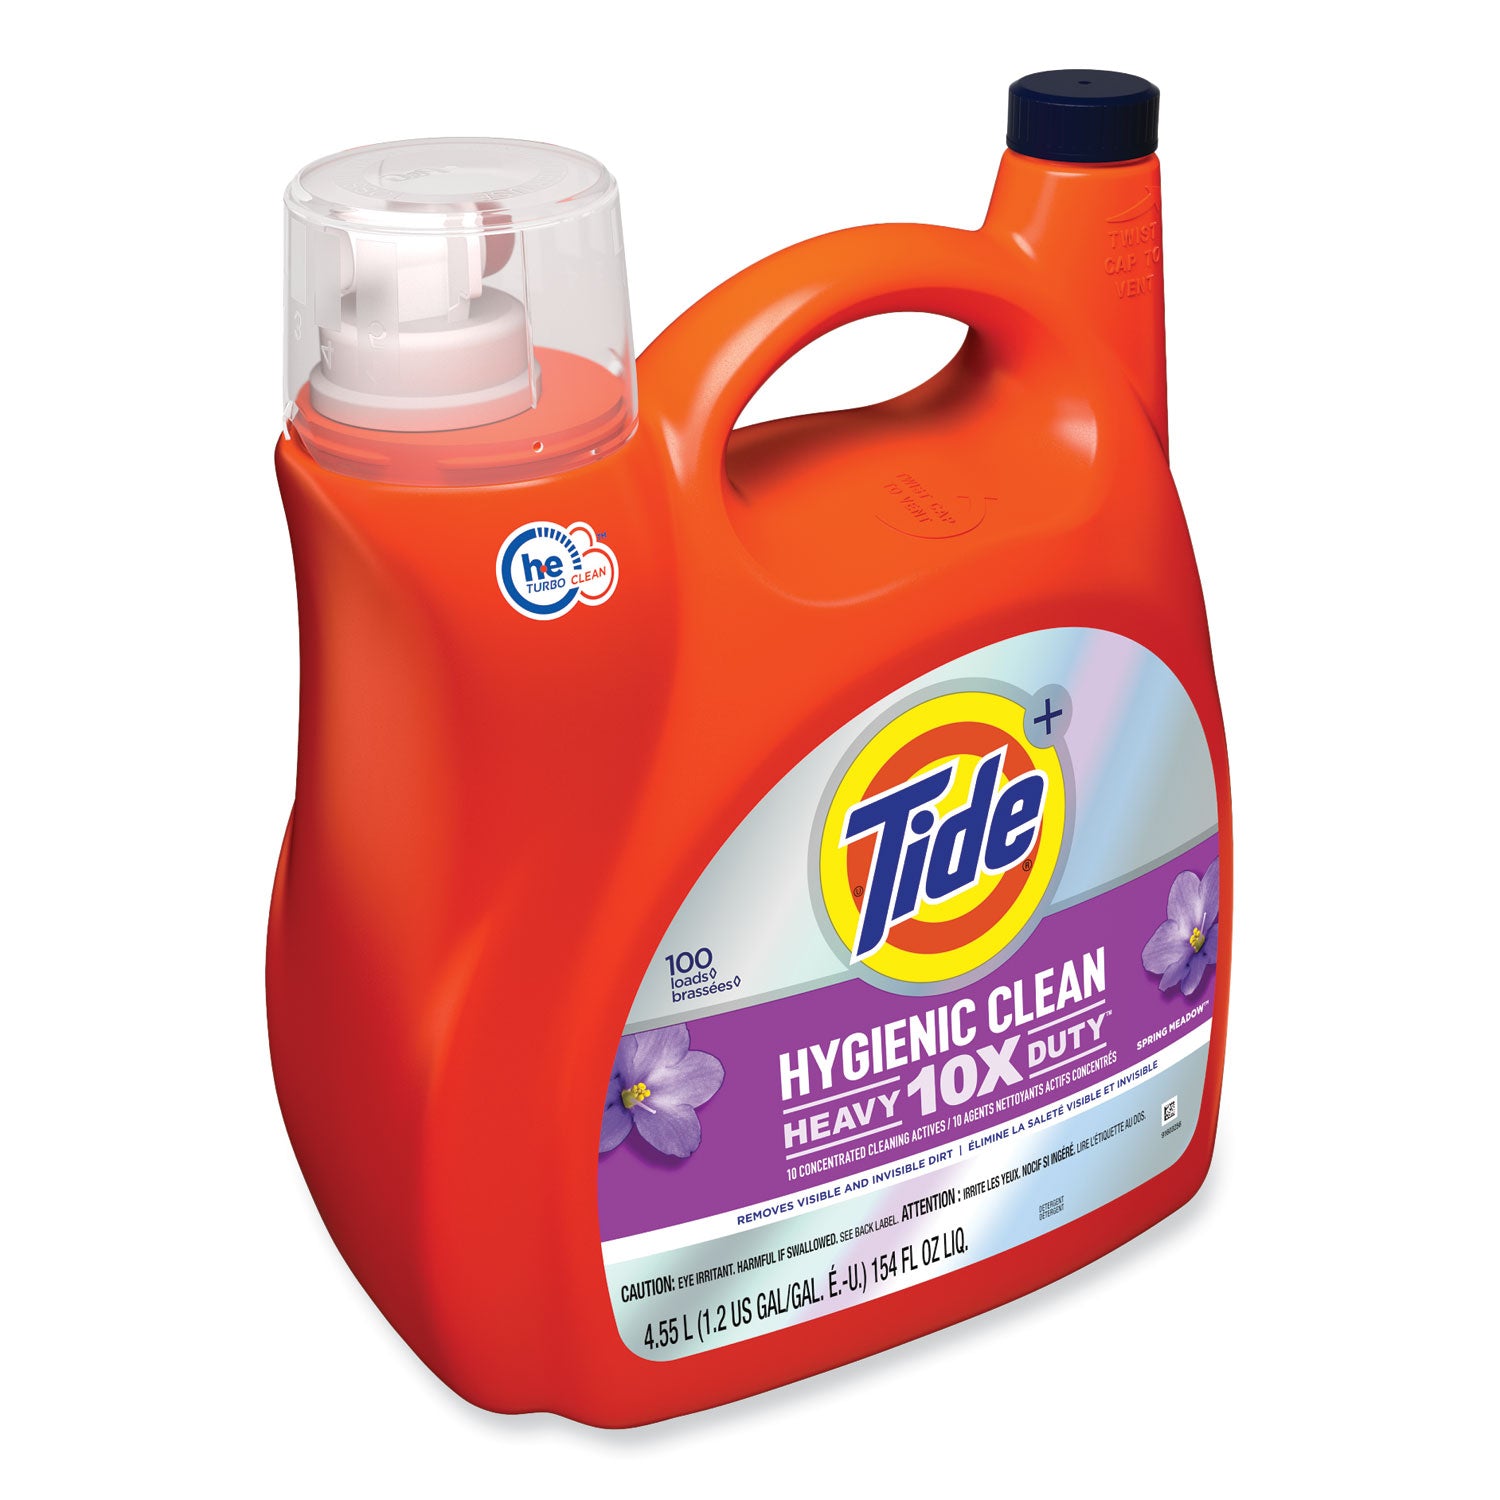 hygienic-clean-heavy-10x-duty-liquid-laundry-detergent-spring-meadow-154-oz-bottle-4-carton_pgc27646 - 2